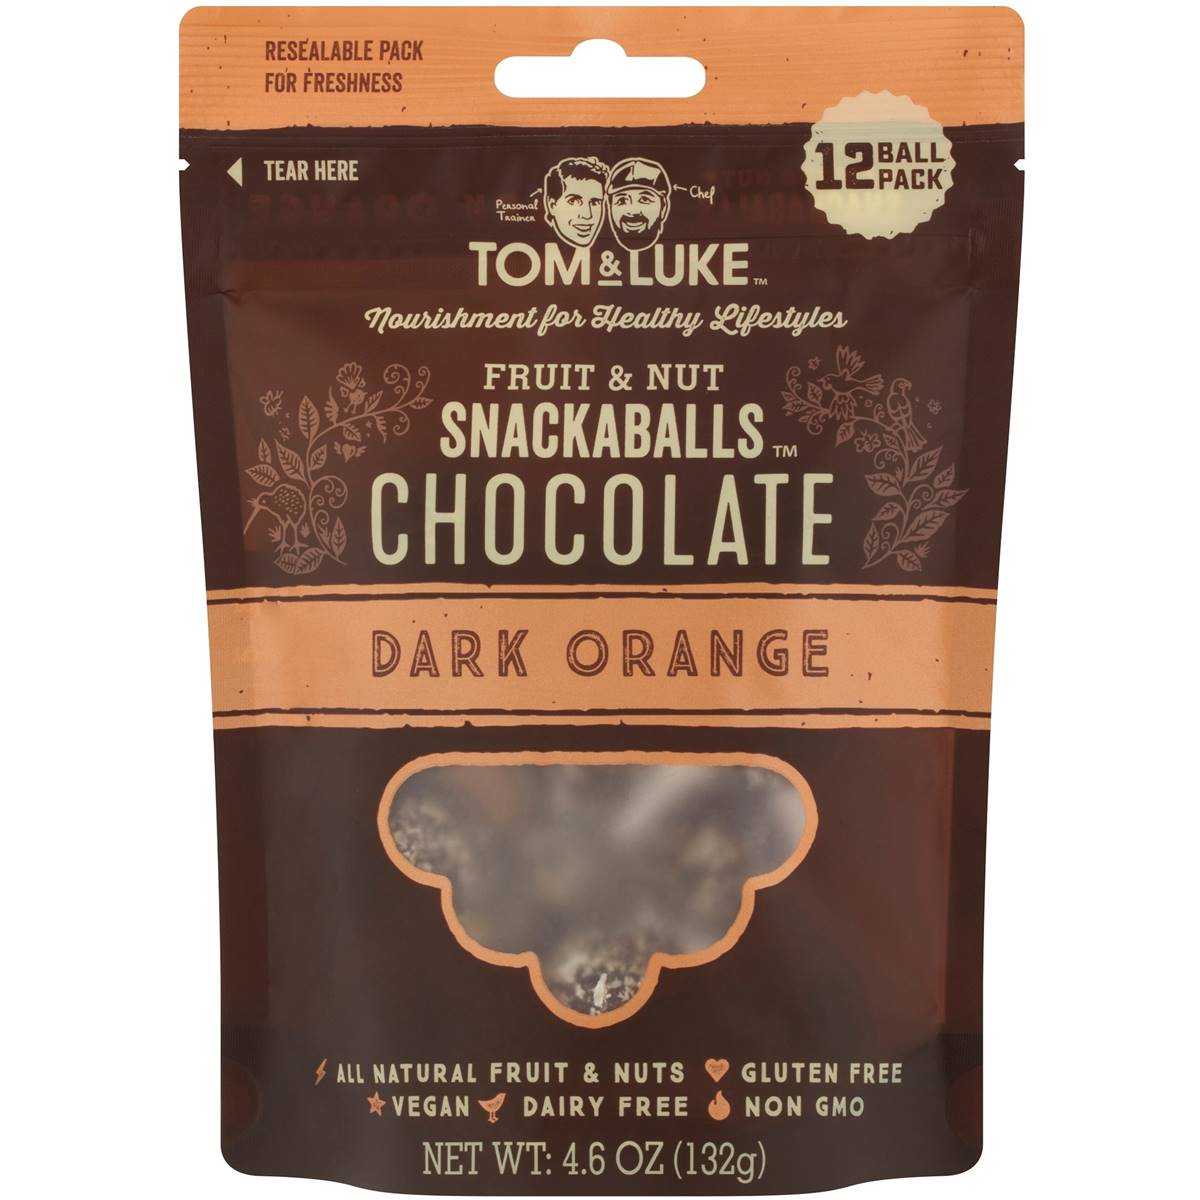 Calories in Tom & Luke Dark Chocolate & Orange Snackballs